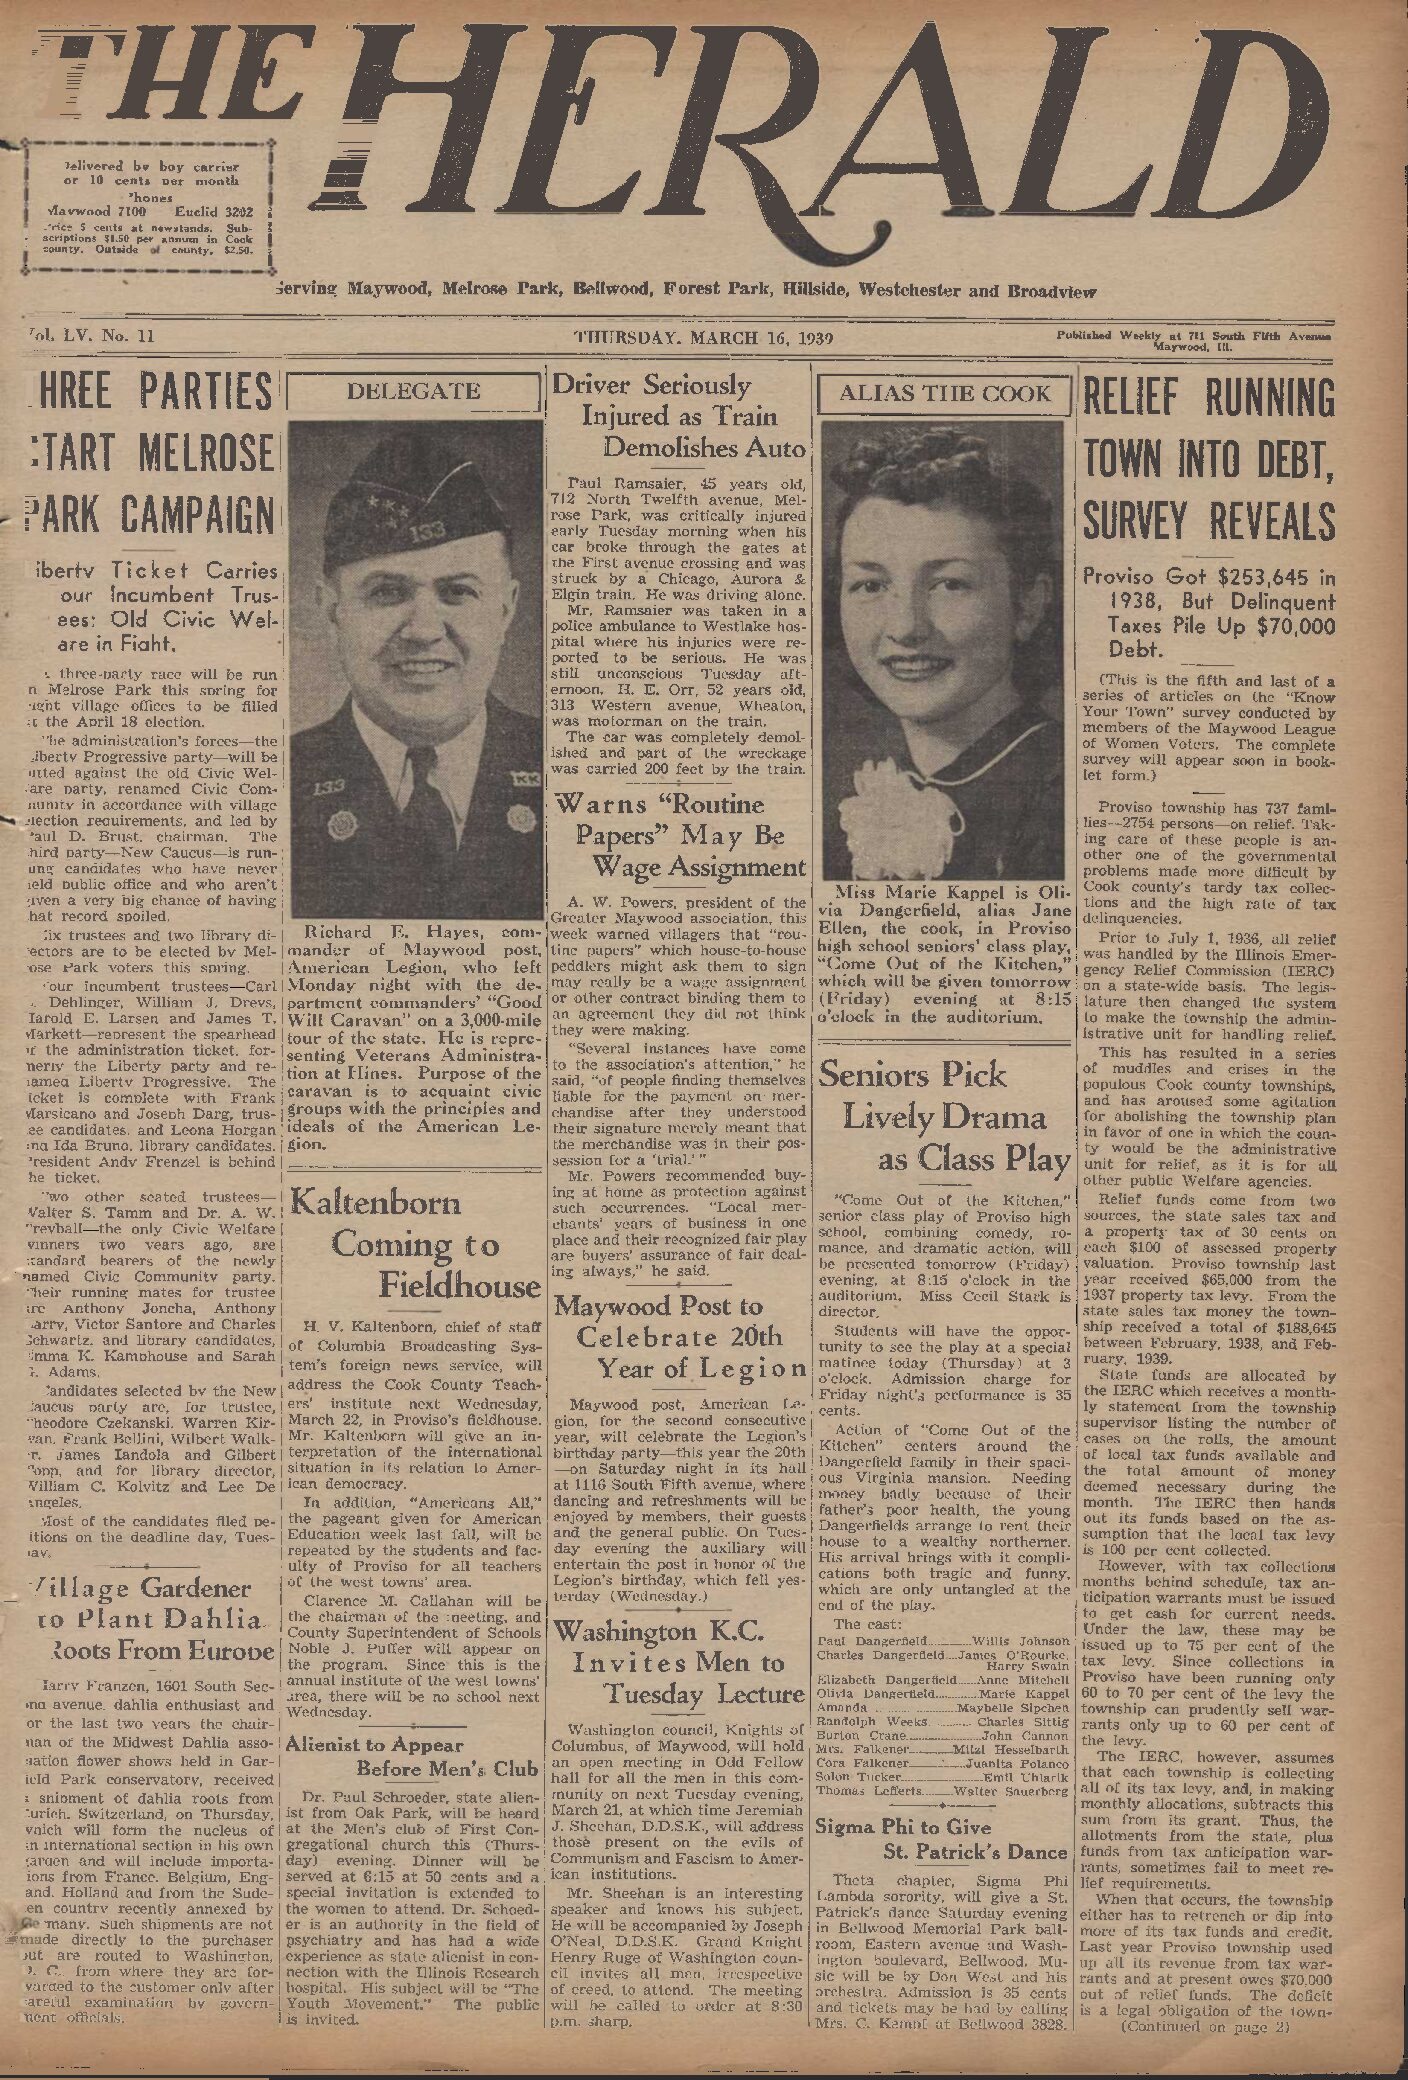 The Herald – 19390316